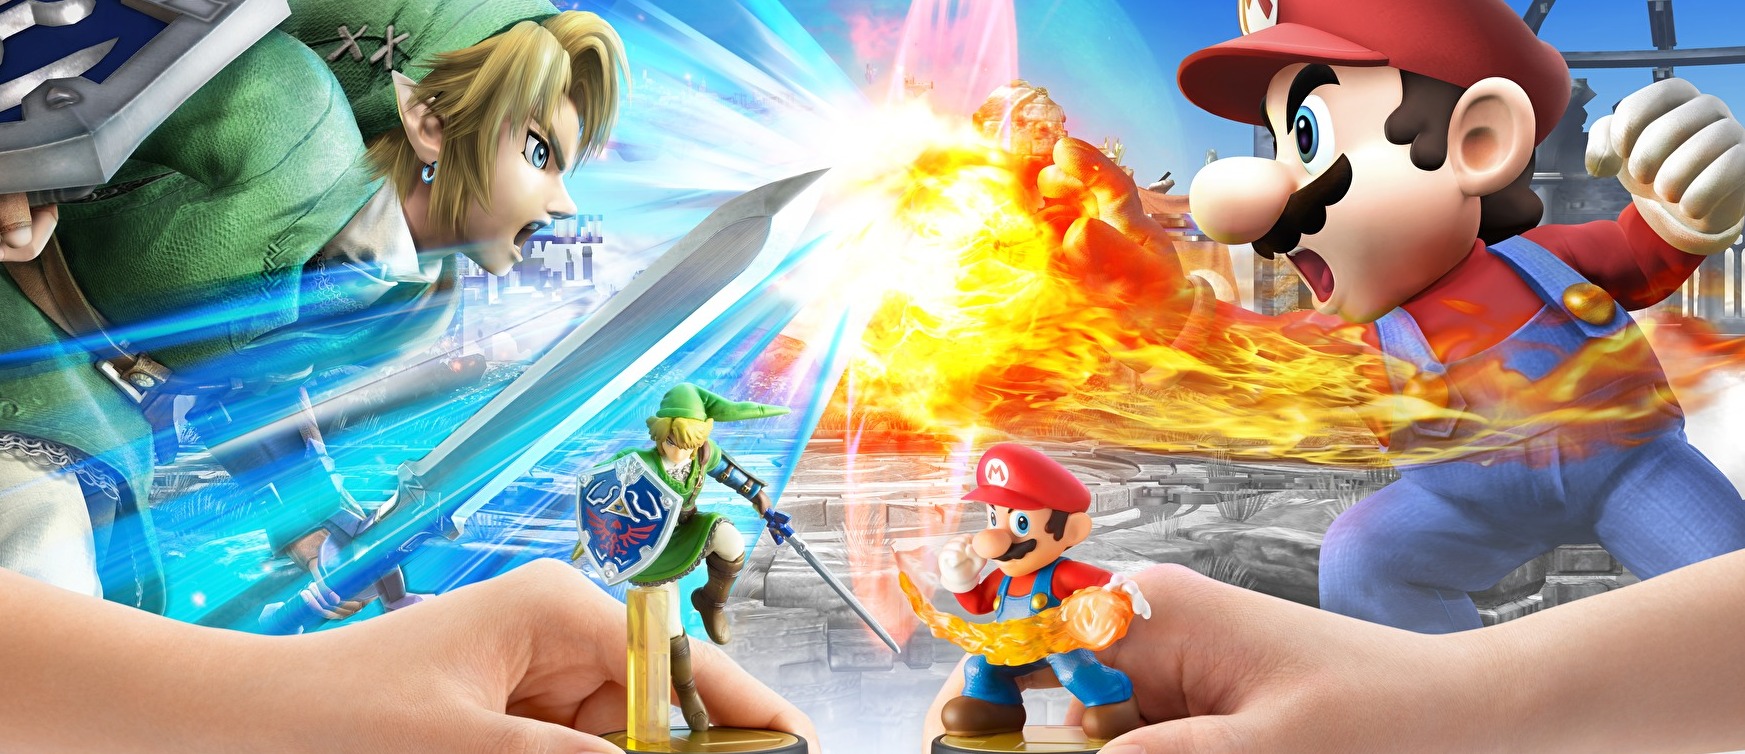 Super Smash Bros for Wii U Amiibo